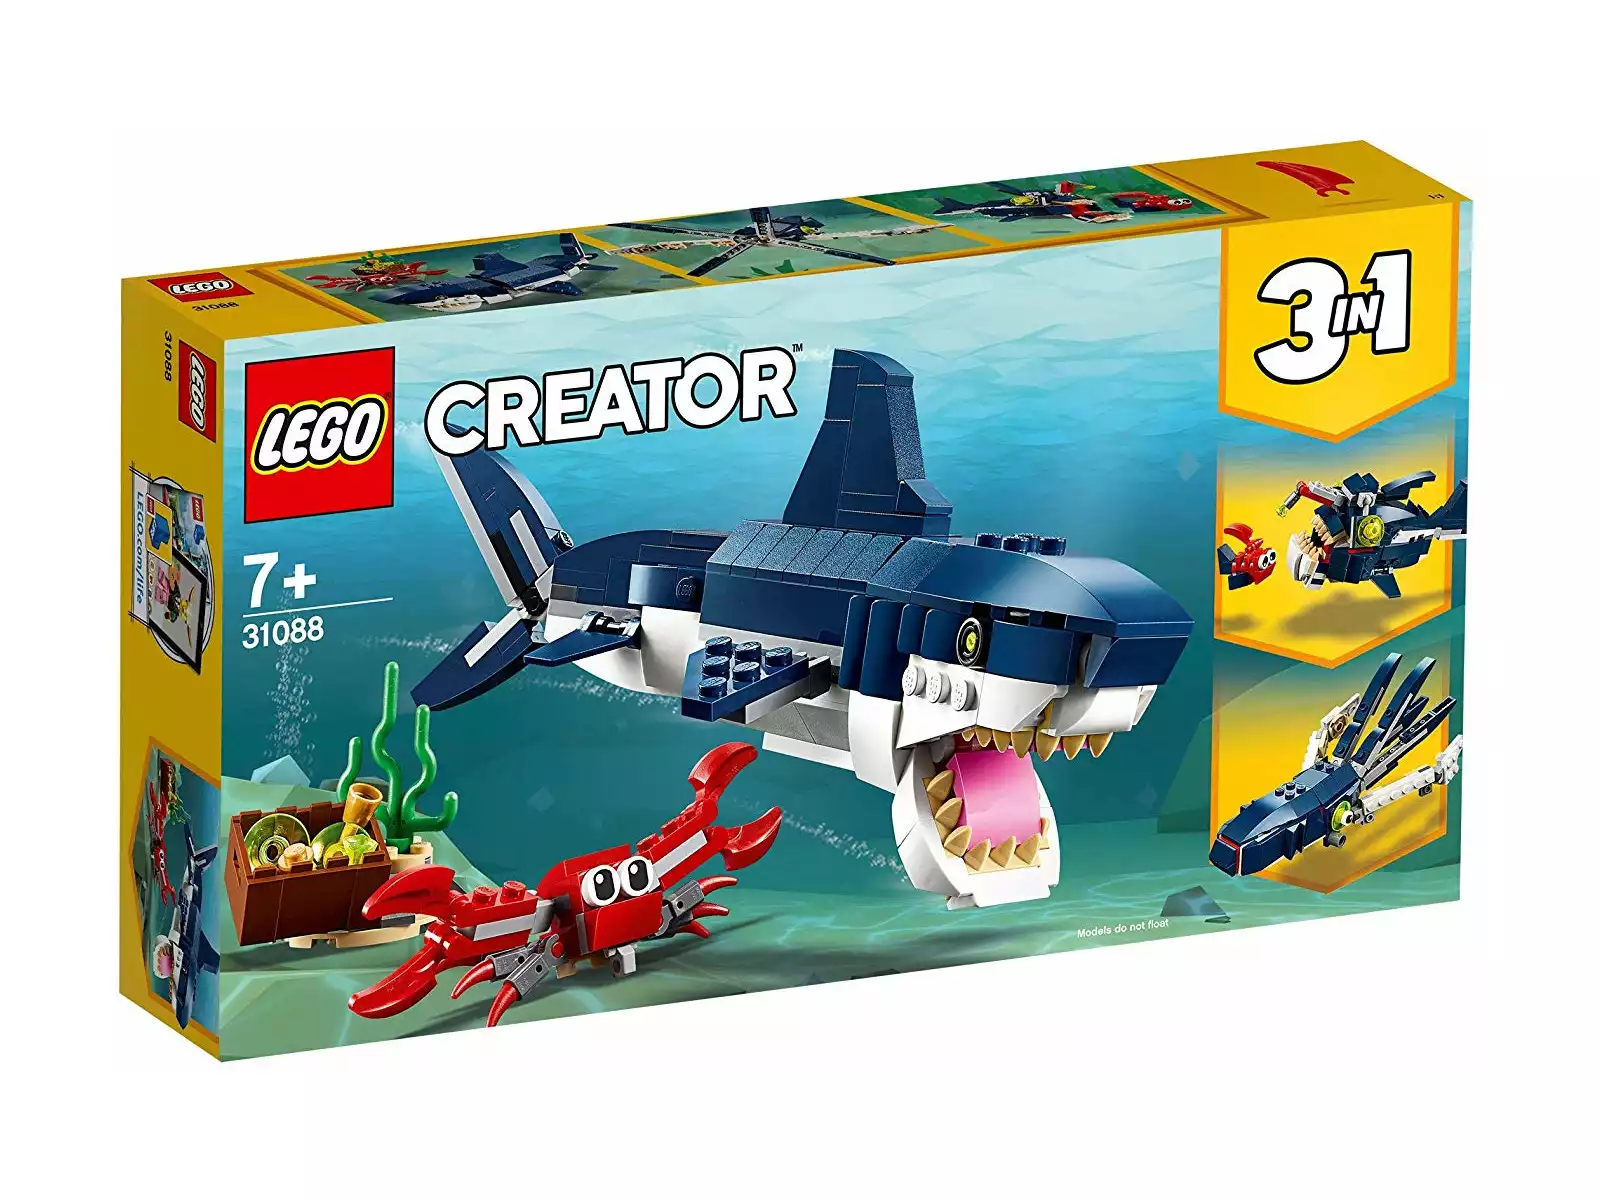 Lego Creator 3 en 1 Reactor Supersónico 31126 - Juguetilandia